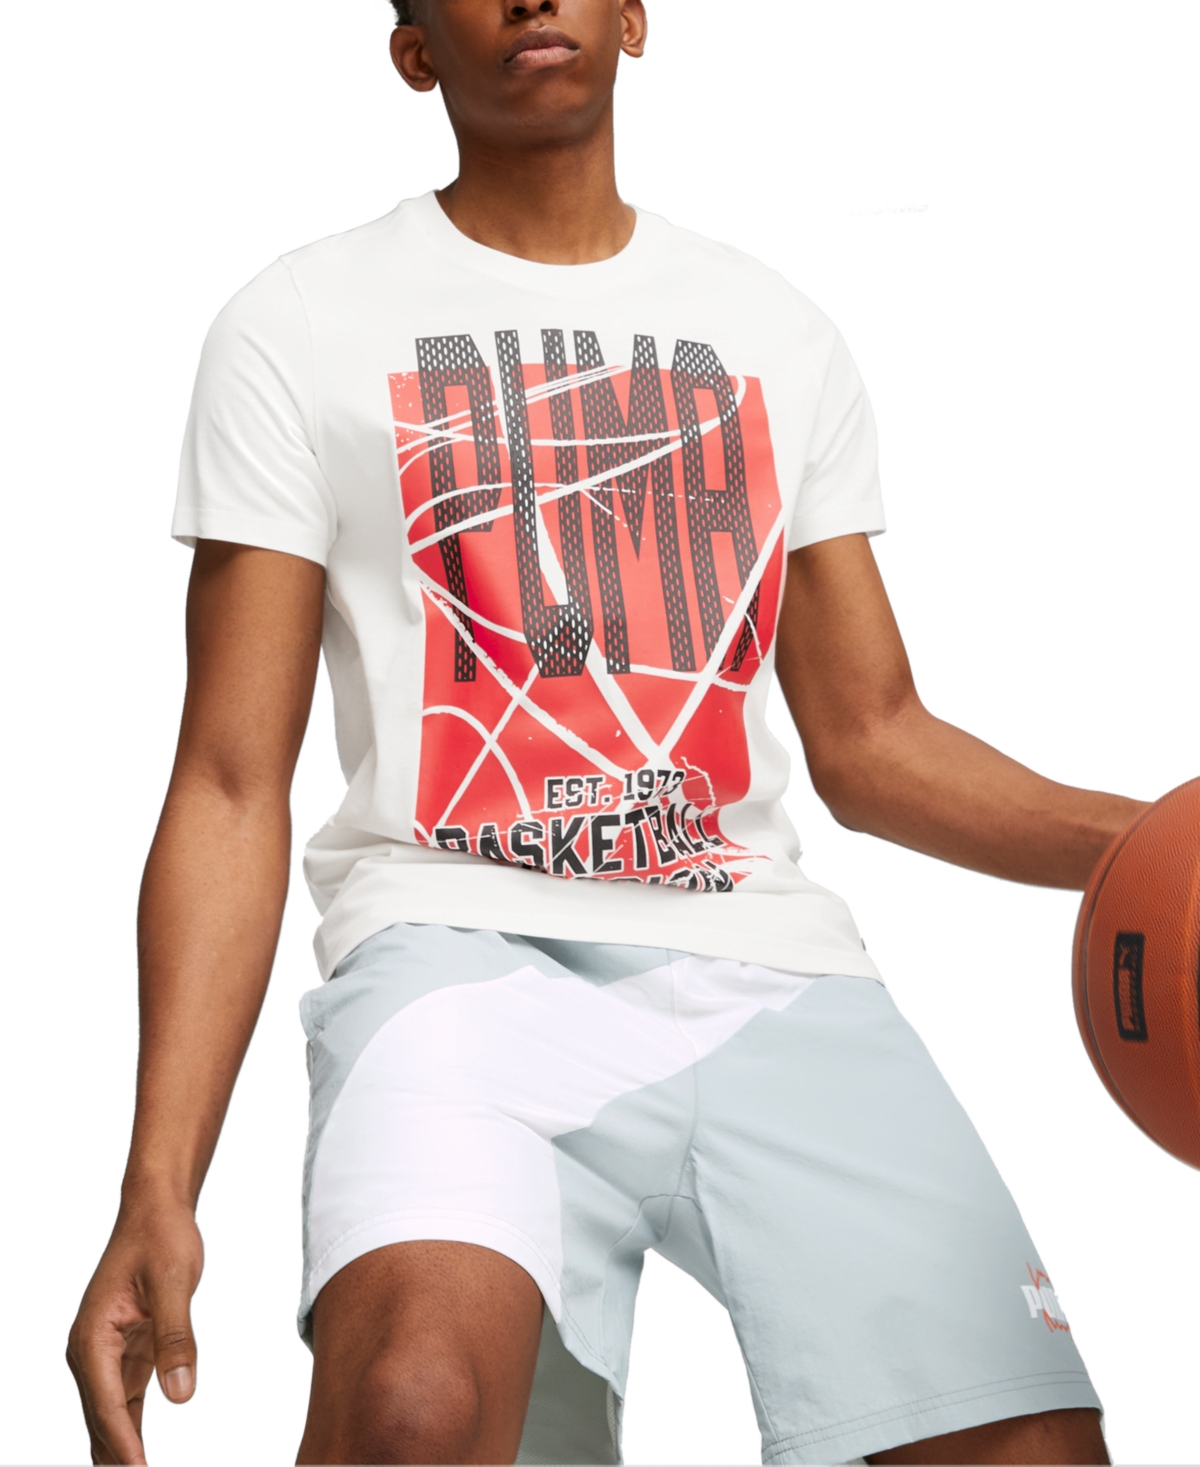 Nike Men's RJ Barrett New York Knicks Icon Player T-Shirt - Macy's